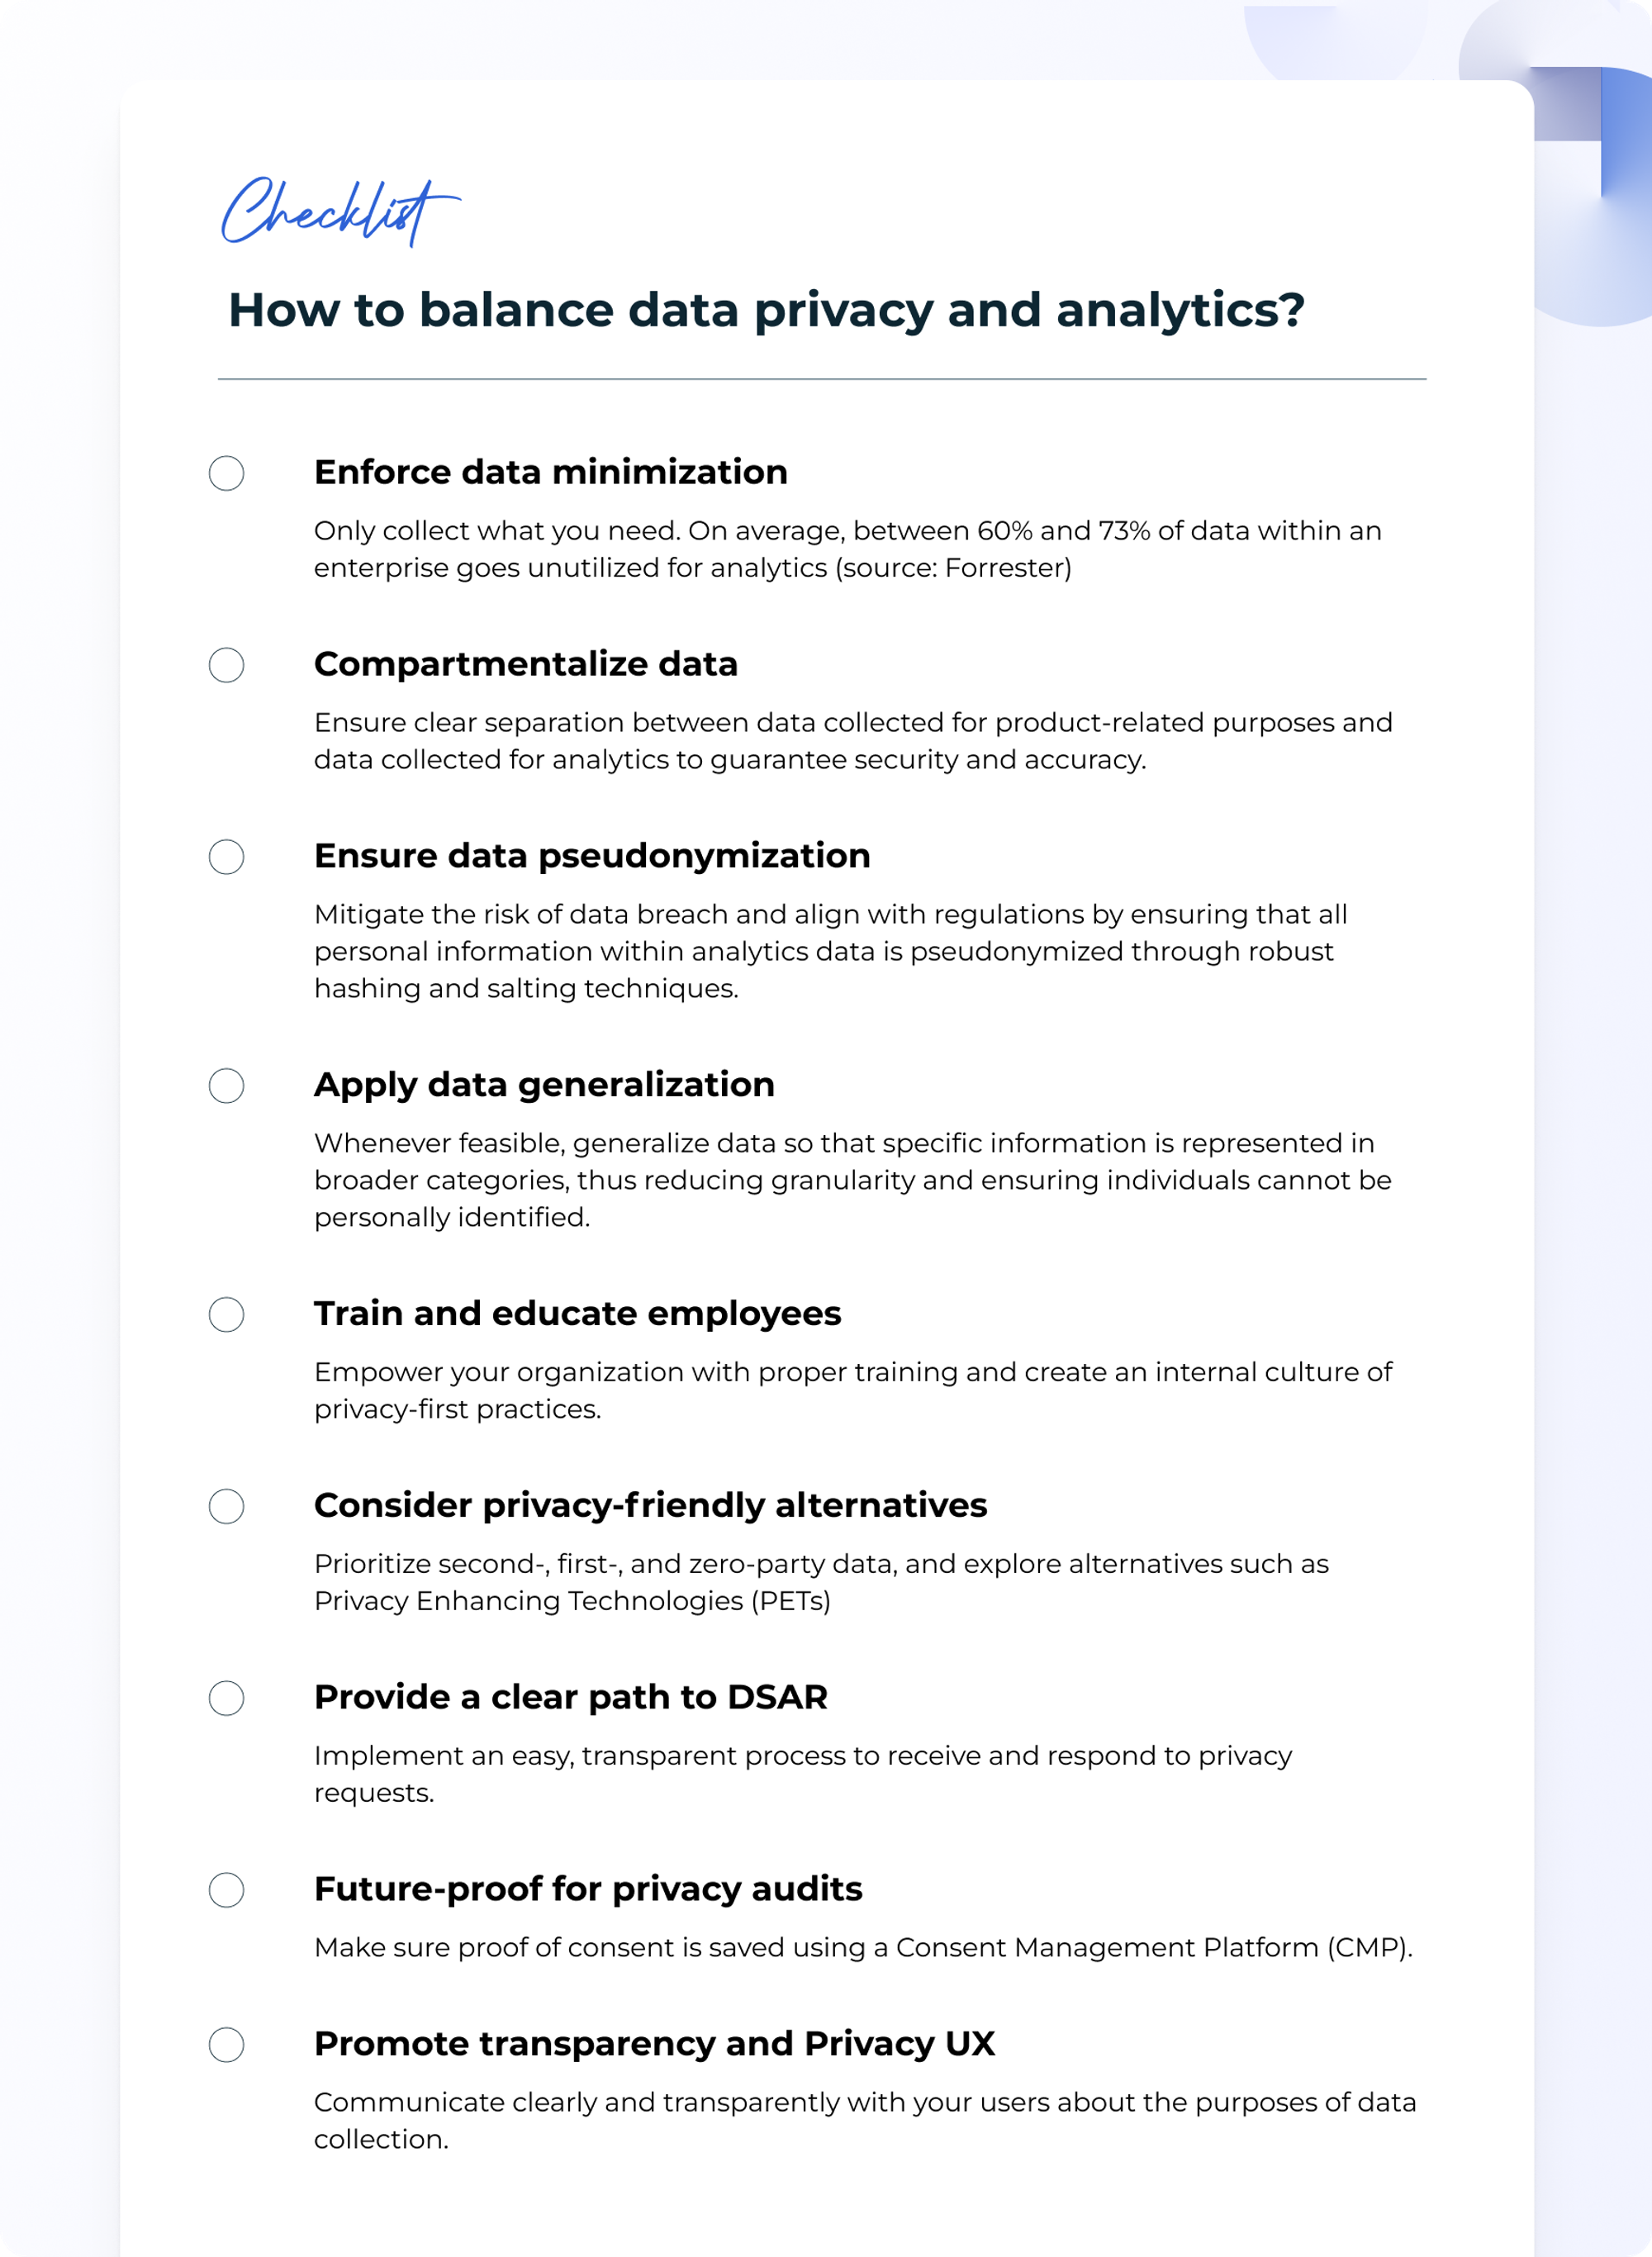 Didomi - data privacy and analytics checklist